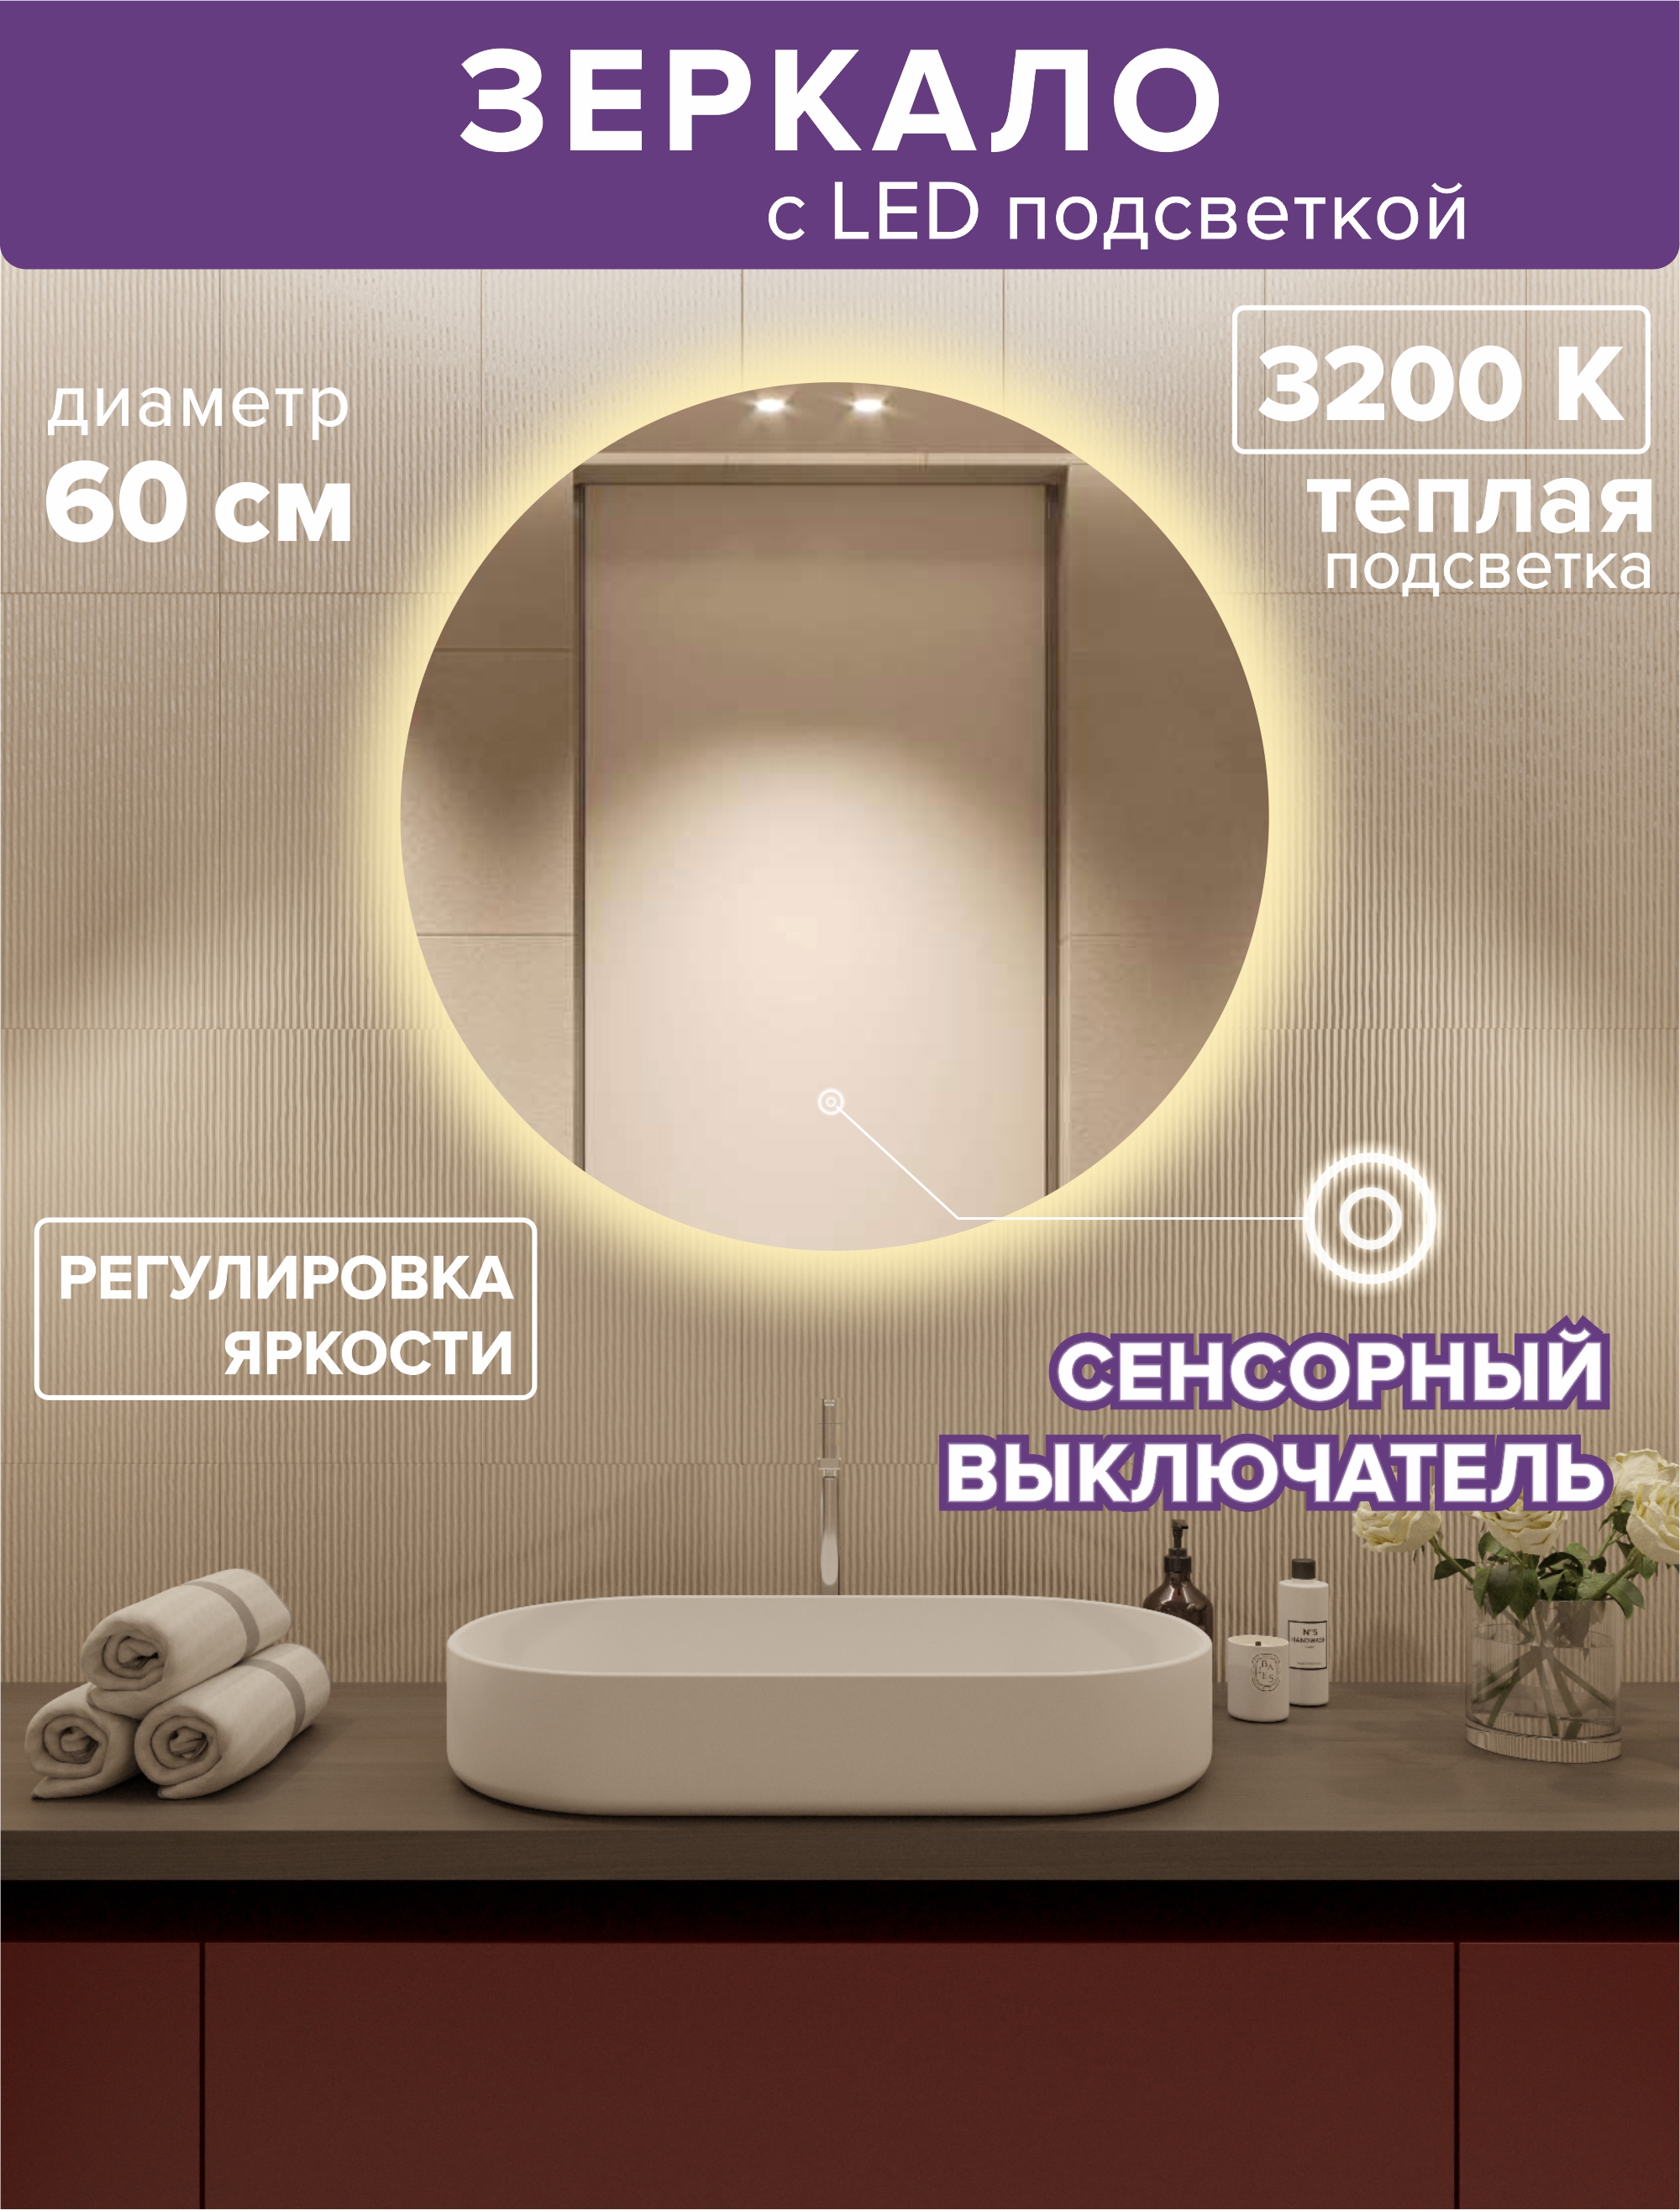 Зеркало для ванной Alfa Mirrors с теплой подсветкой 3200К круглое 60см, арт. Na-6t